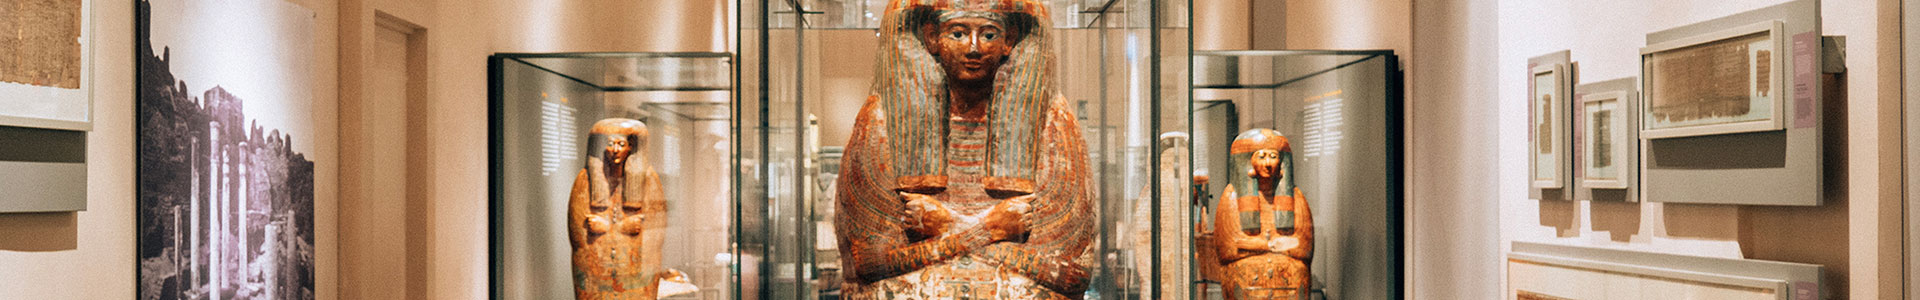 Torino museo egizio